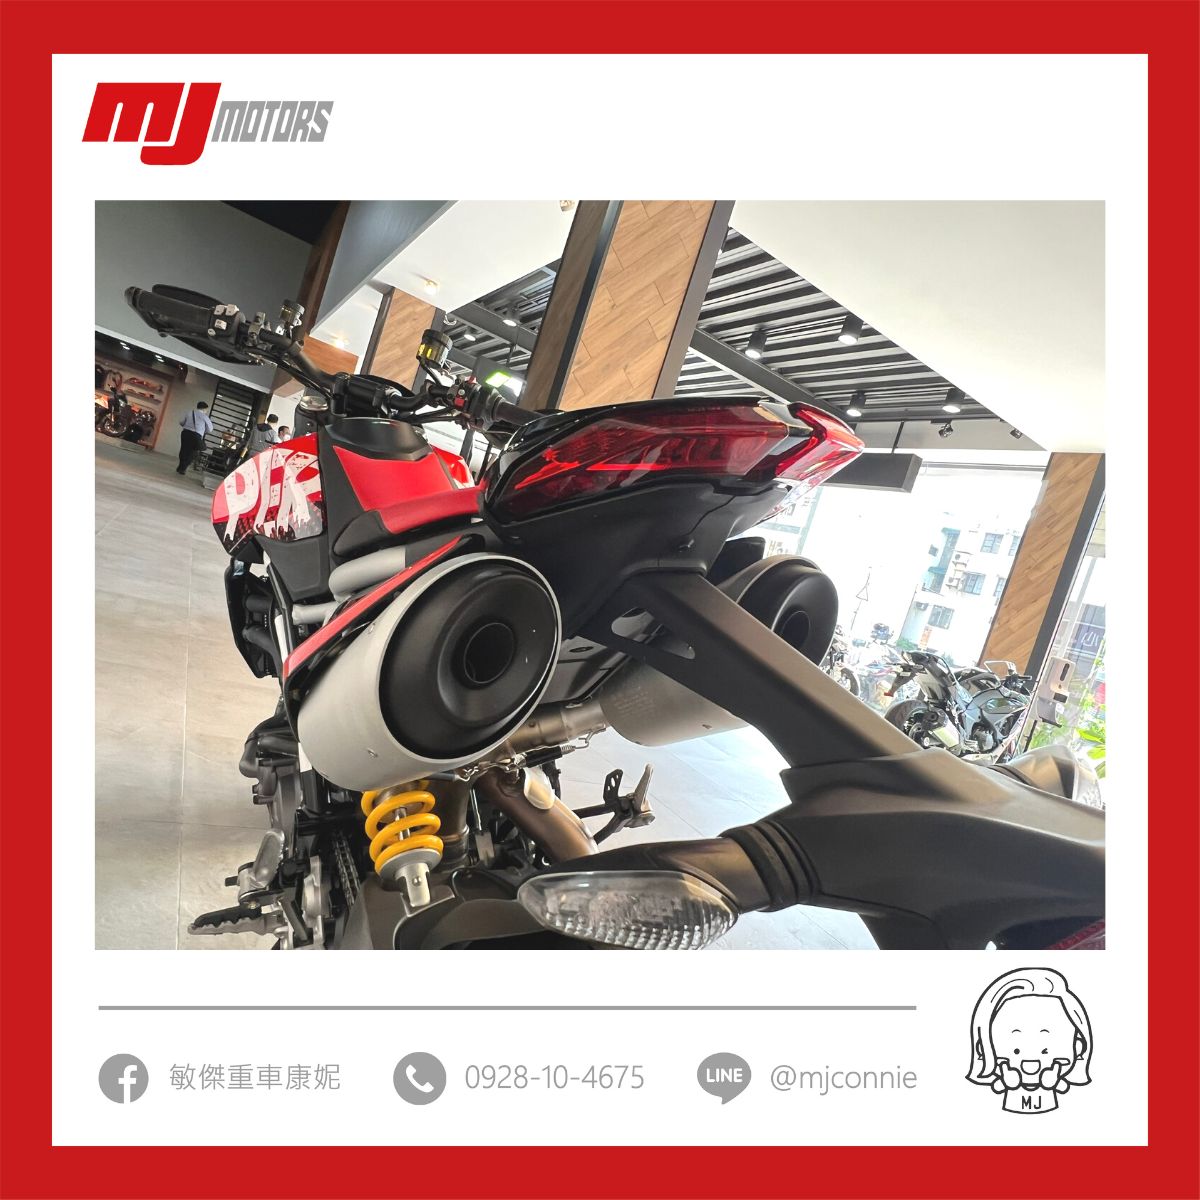 DUCATI HYPERMOTARD 950新車出售中 『敏傑康妮』Ducati Hypermotard RVE 給您帥氣塗鴉 滑胎車首選！ | 敏傑車業資深銷售專員 康妮 Connie